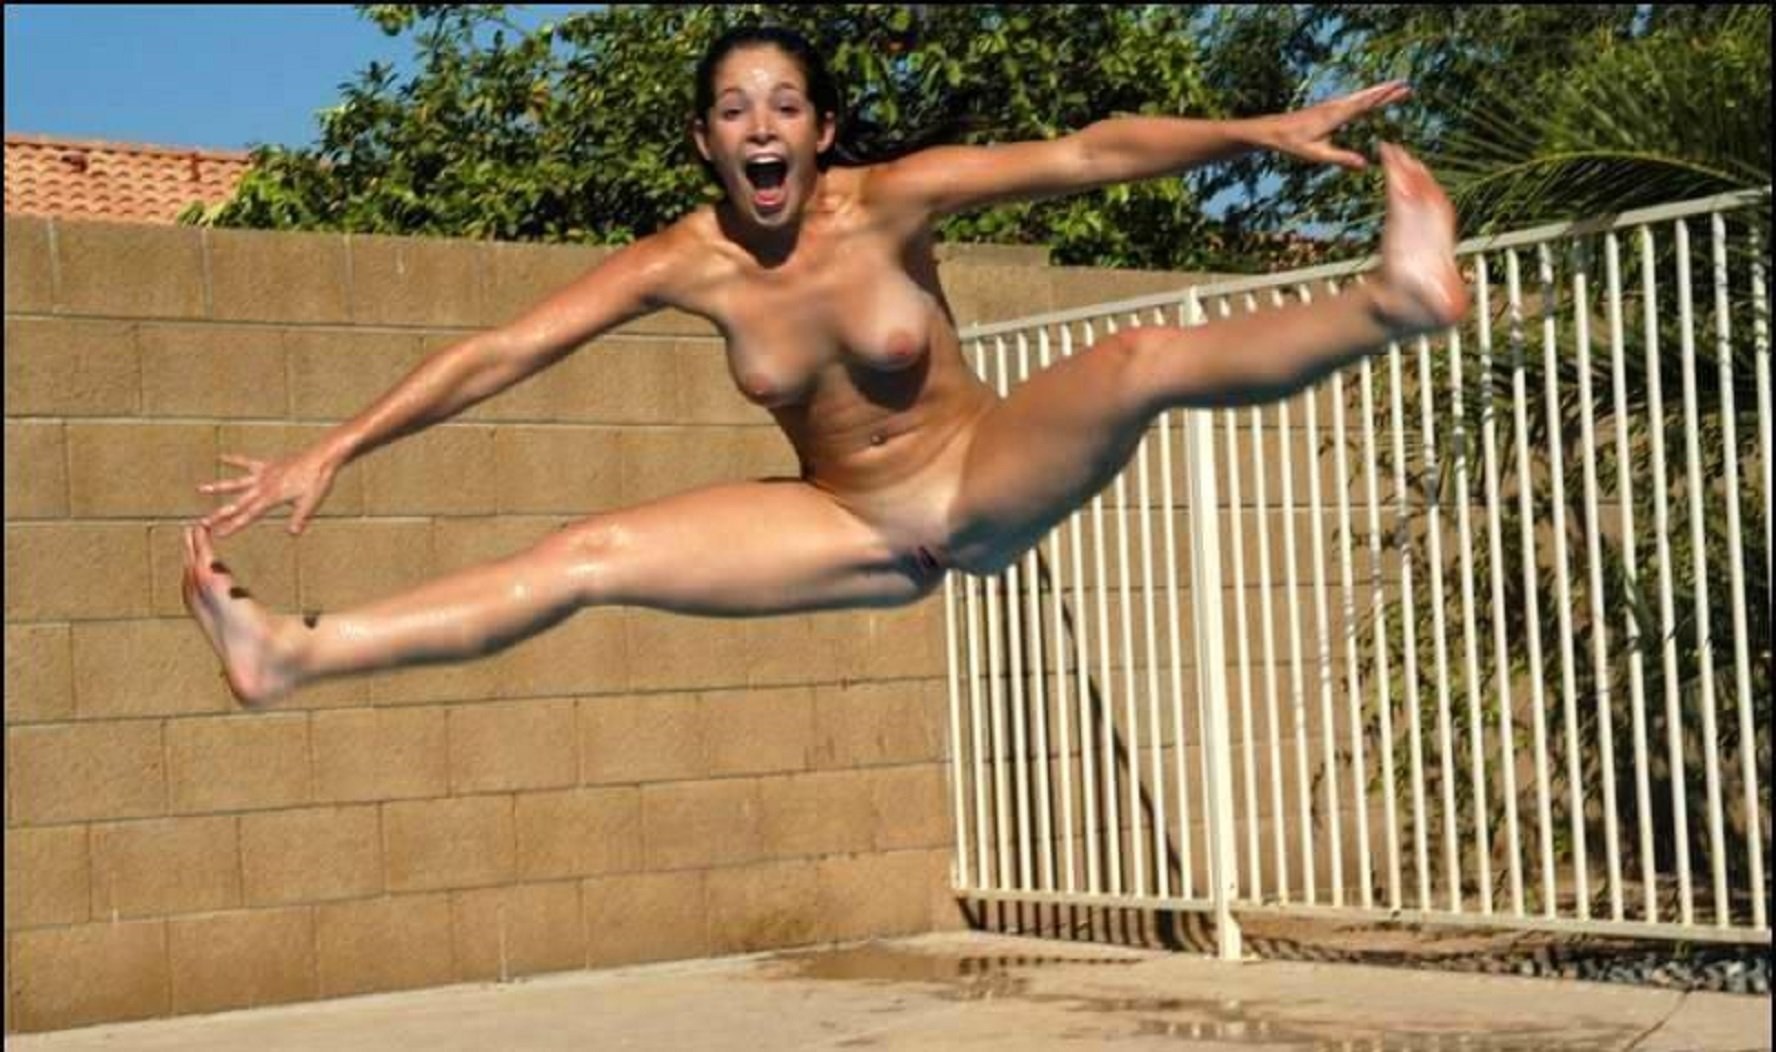 Women jumping naked